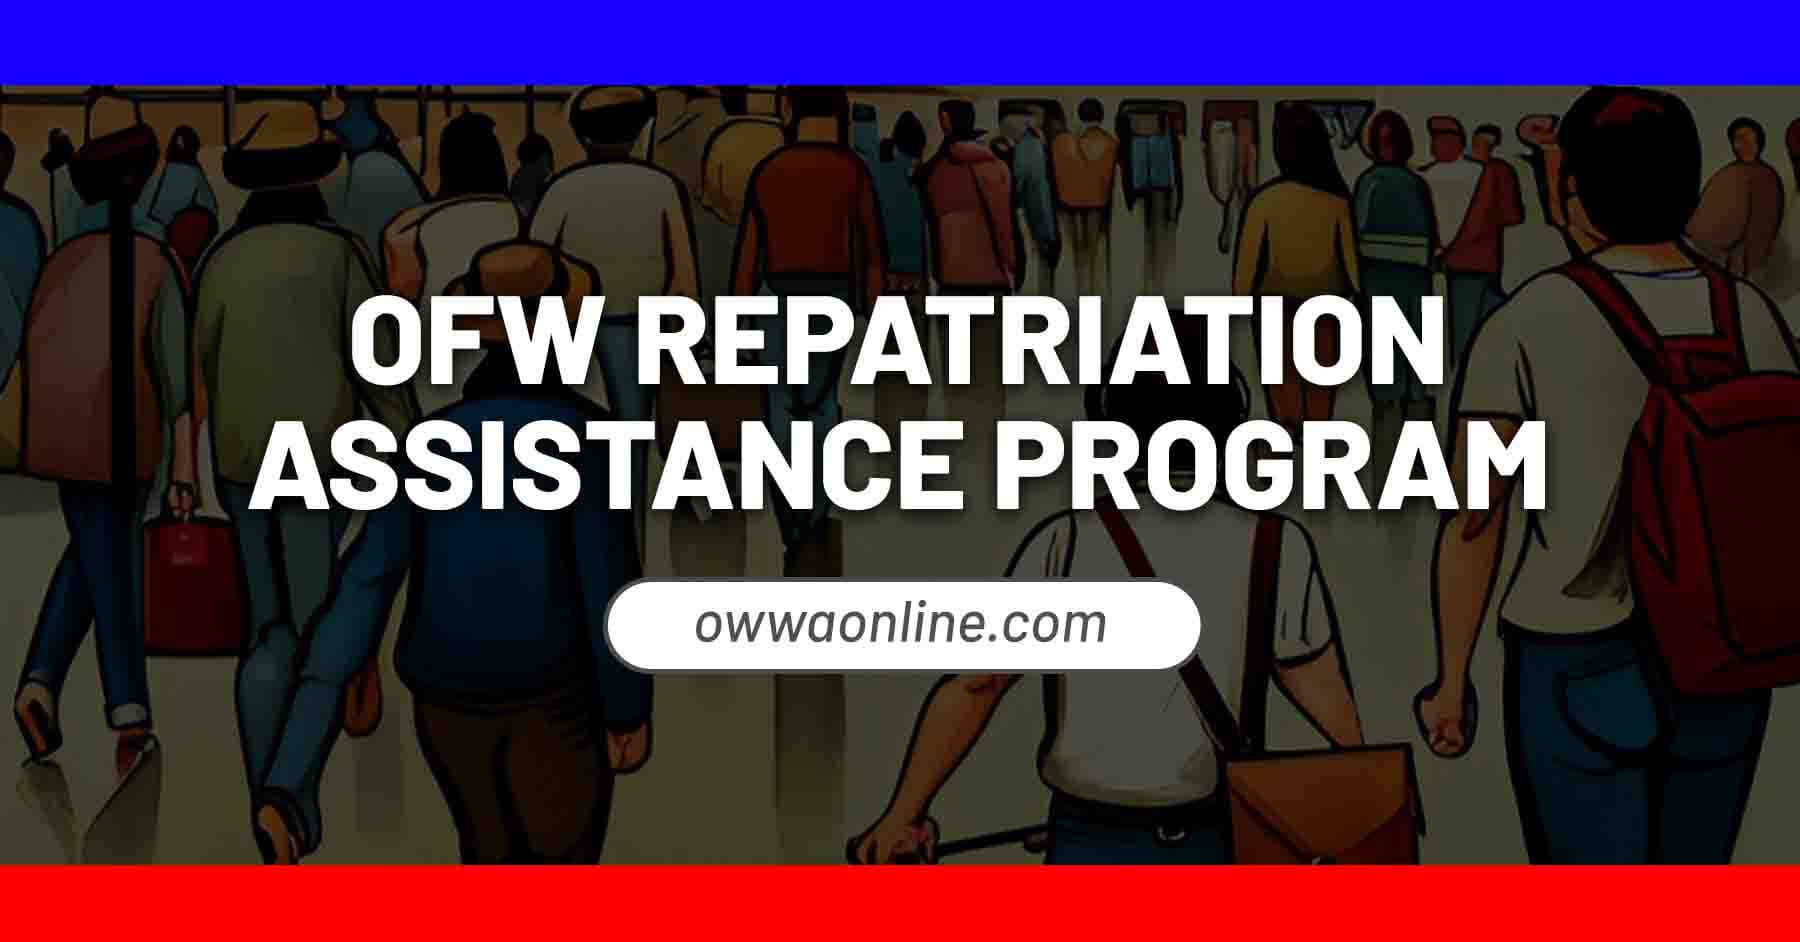 ofw-repatriation-assistance-program